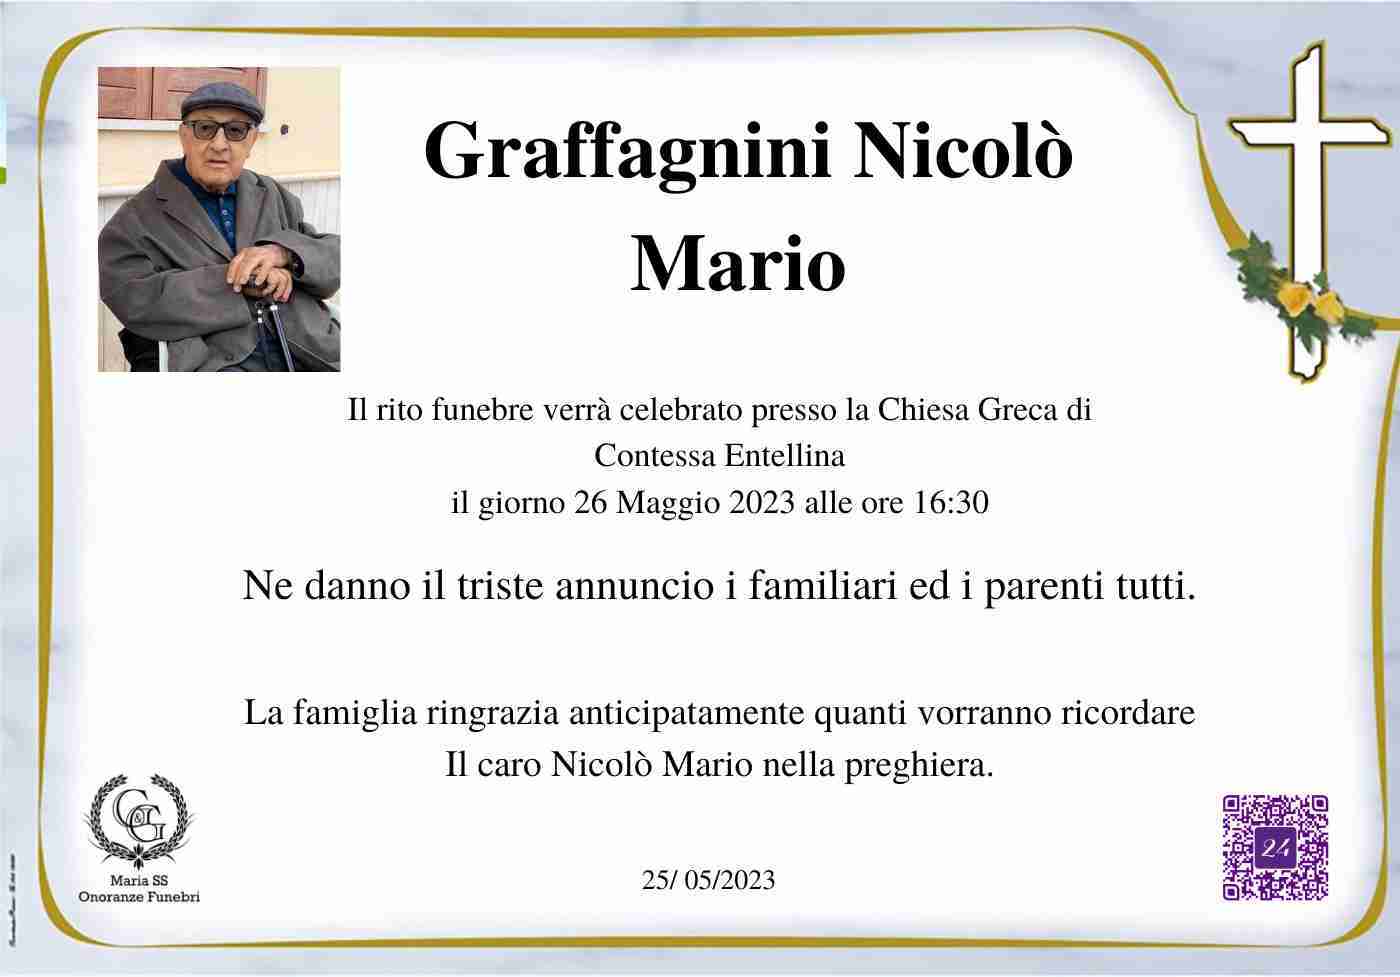 Nicolò Mario Graffagnini